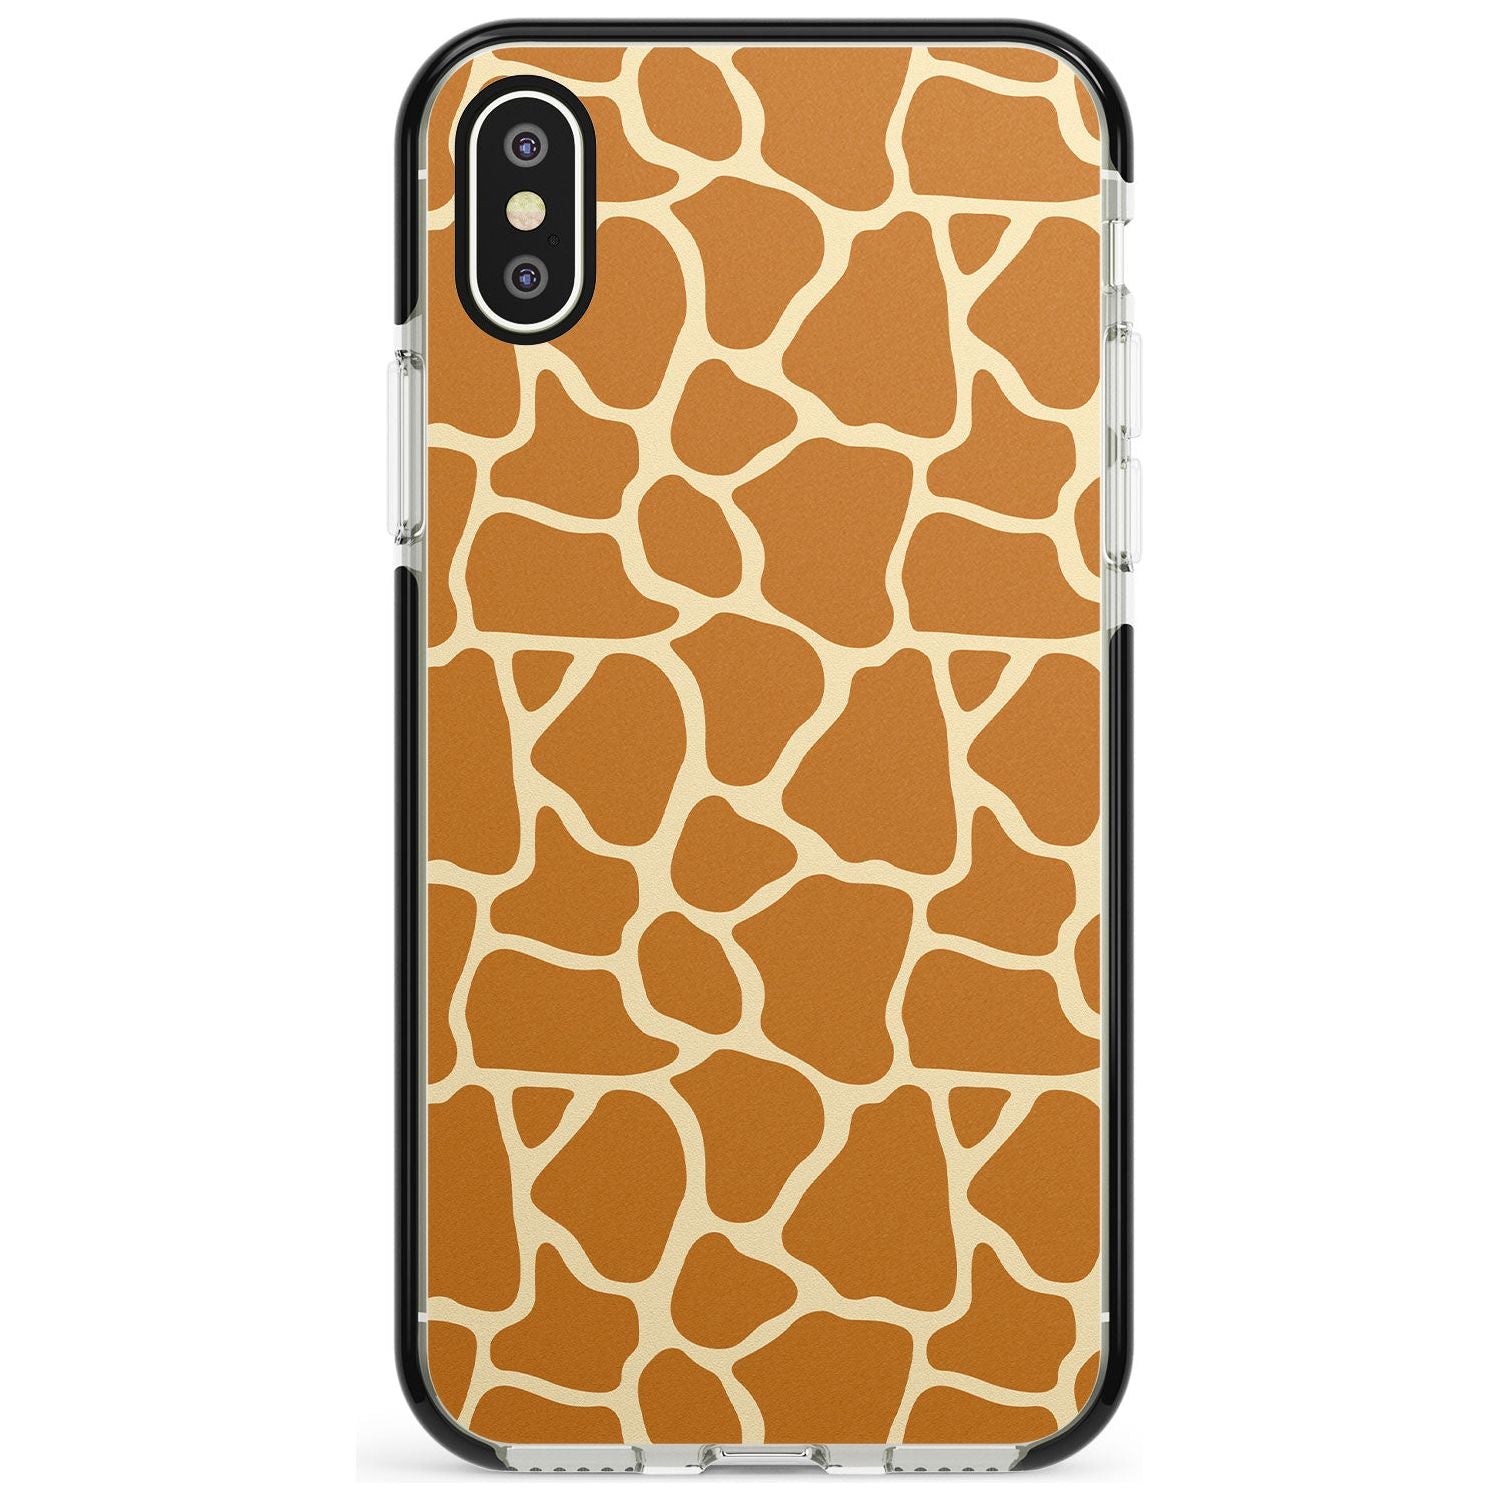 Giraffe Pattern Black Impact Phone Case for iPhone X XS Max XR